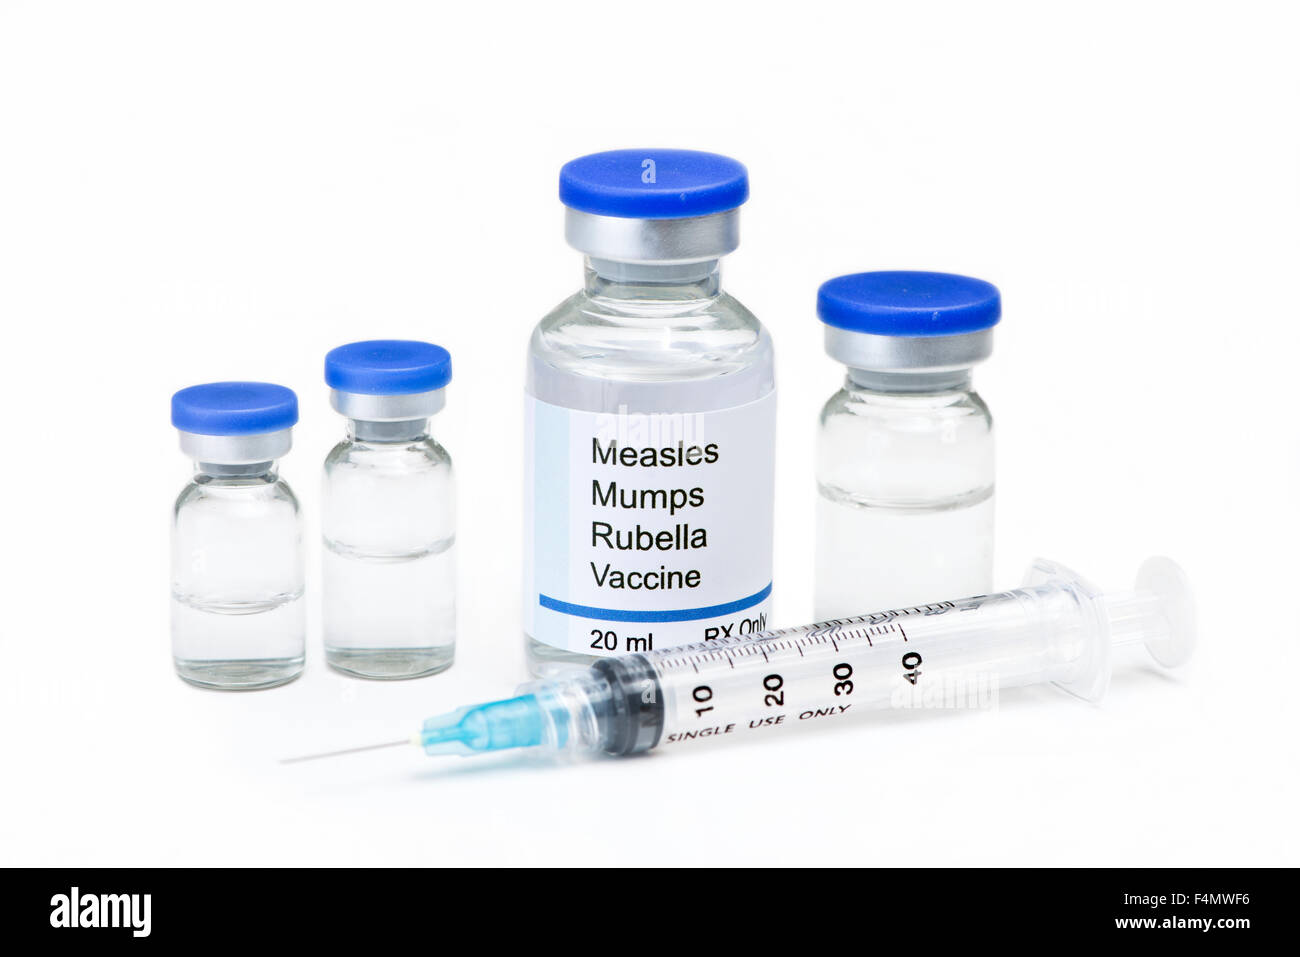 Measles, mumps, rubella, virus vaccine vials and syringe on white background. Stock Photo